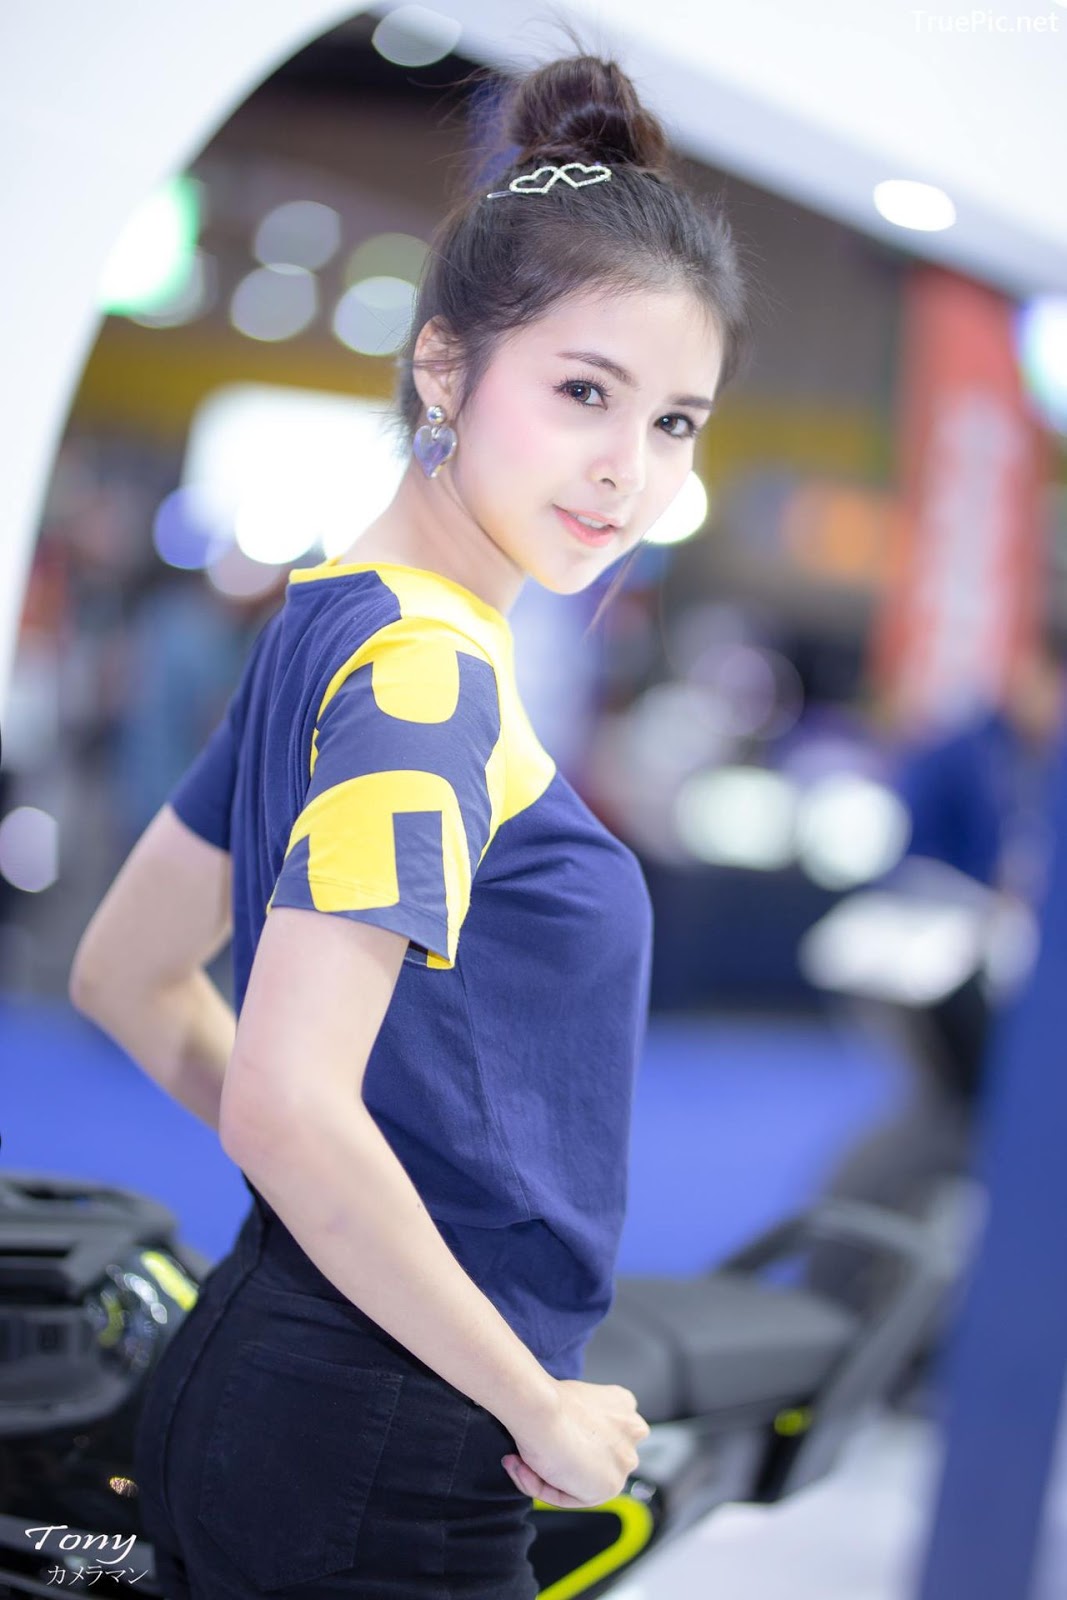 Image-Thailand-Hot-Model-Thai-Racing-Girl-At-Big-Motor-2018-TruePic.net- Picture-62